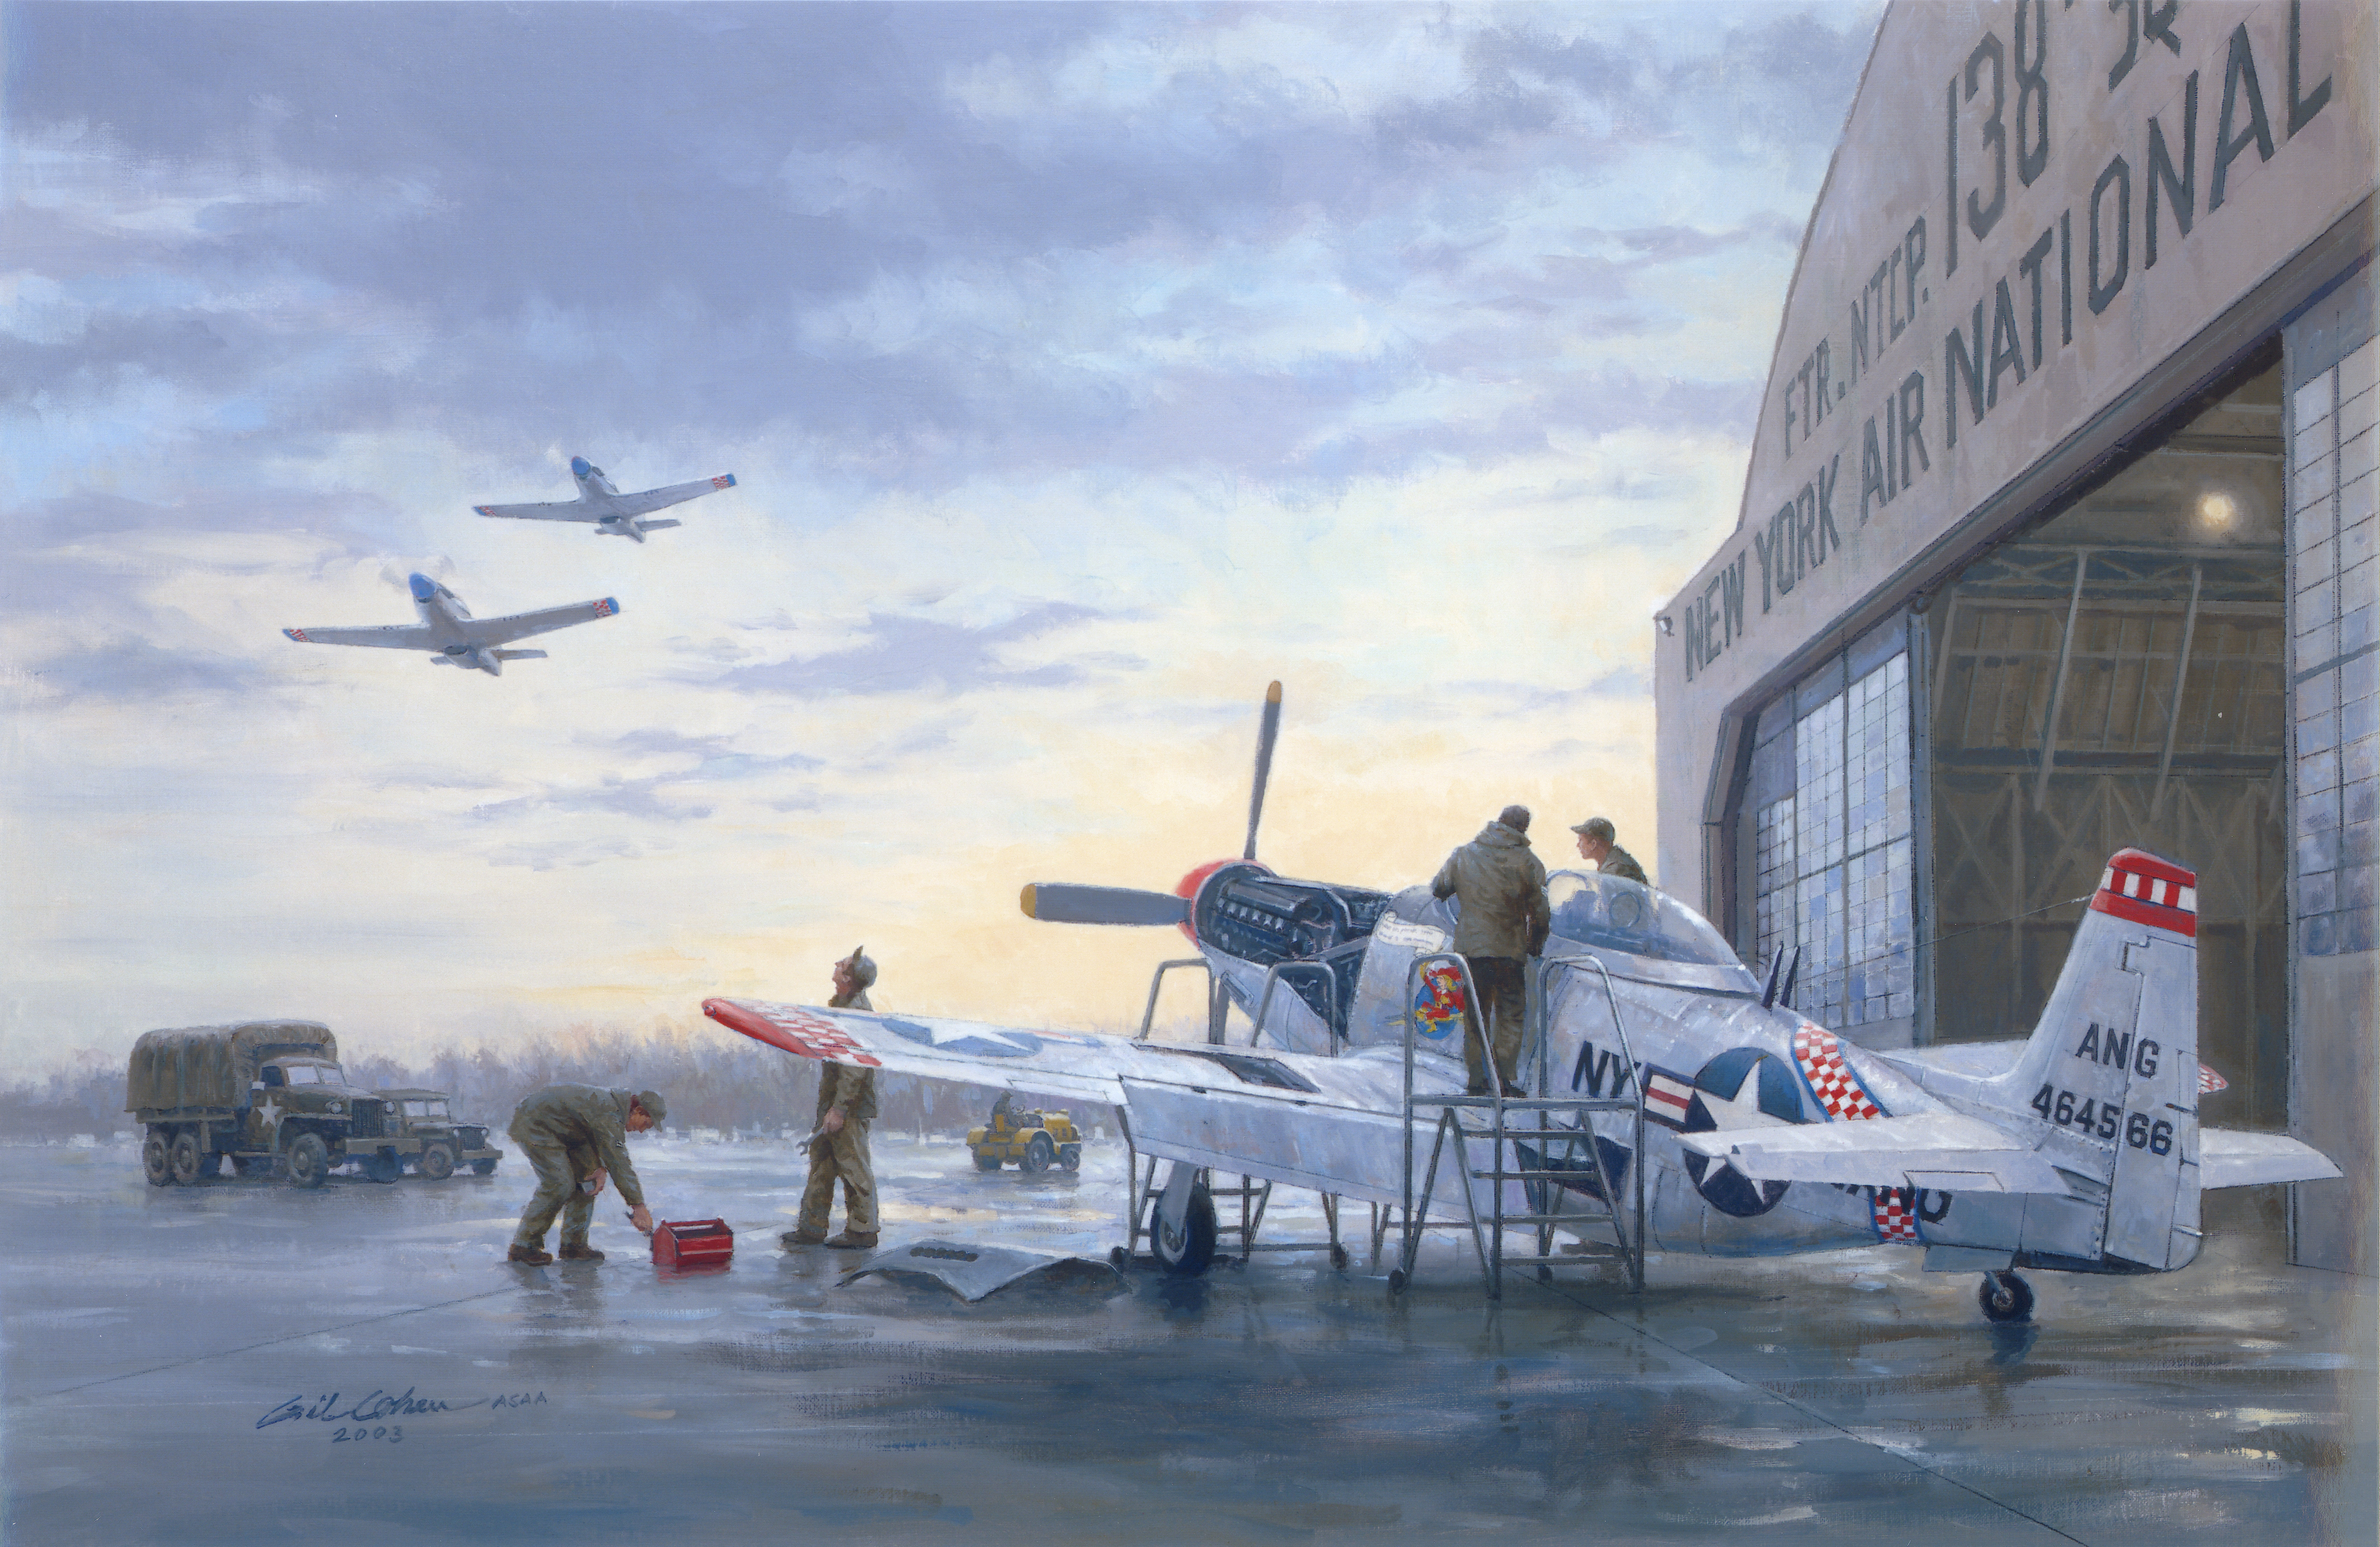 Download wallpaper p 51 mustang, ww2, war, art, painting, aviation ...